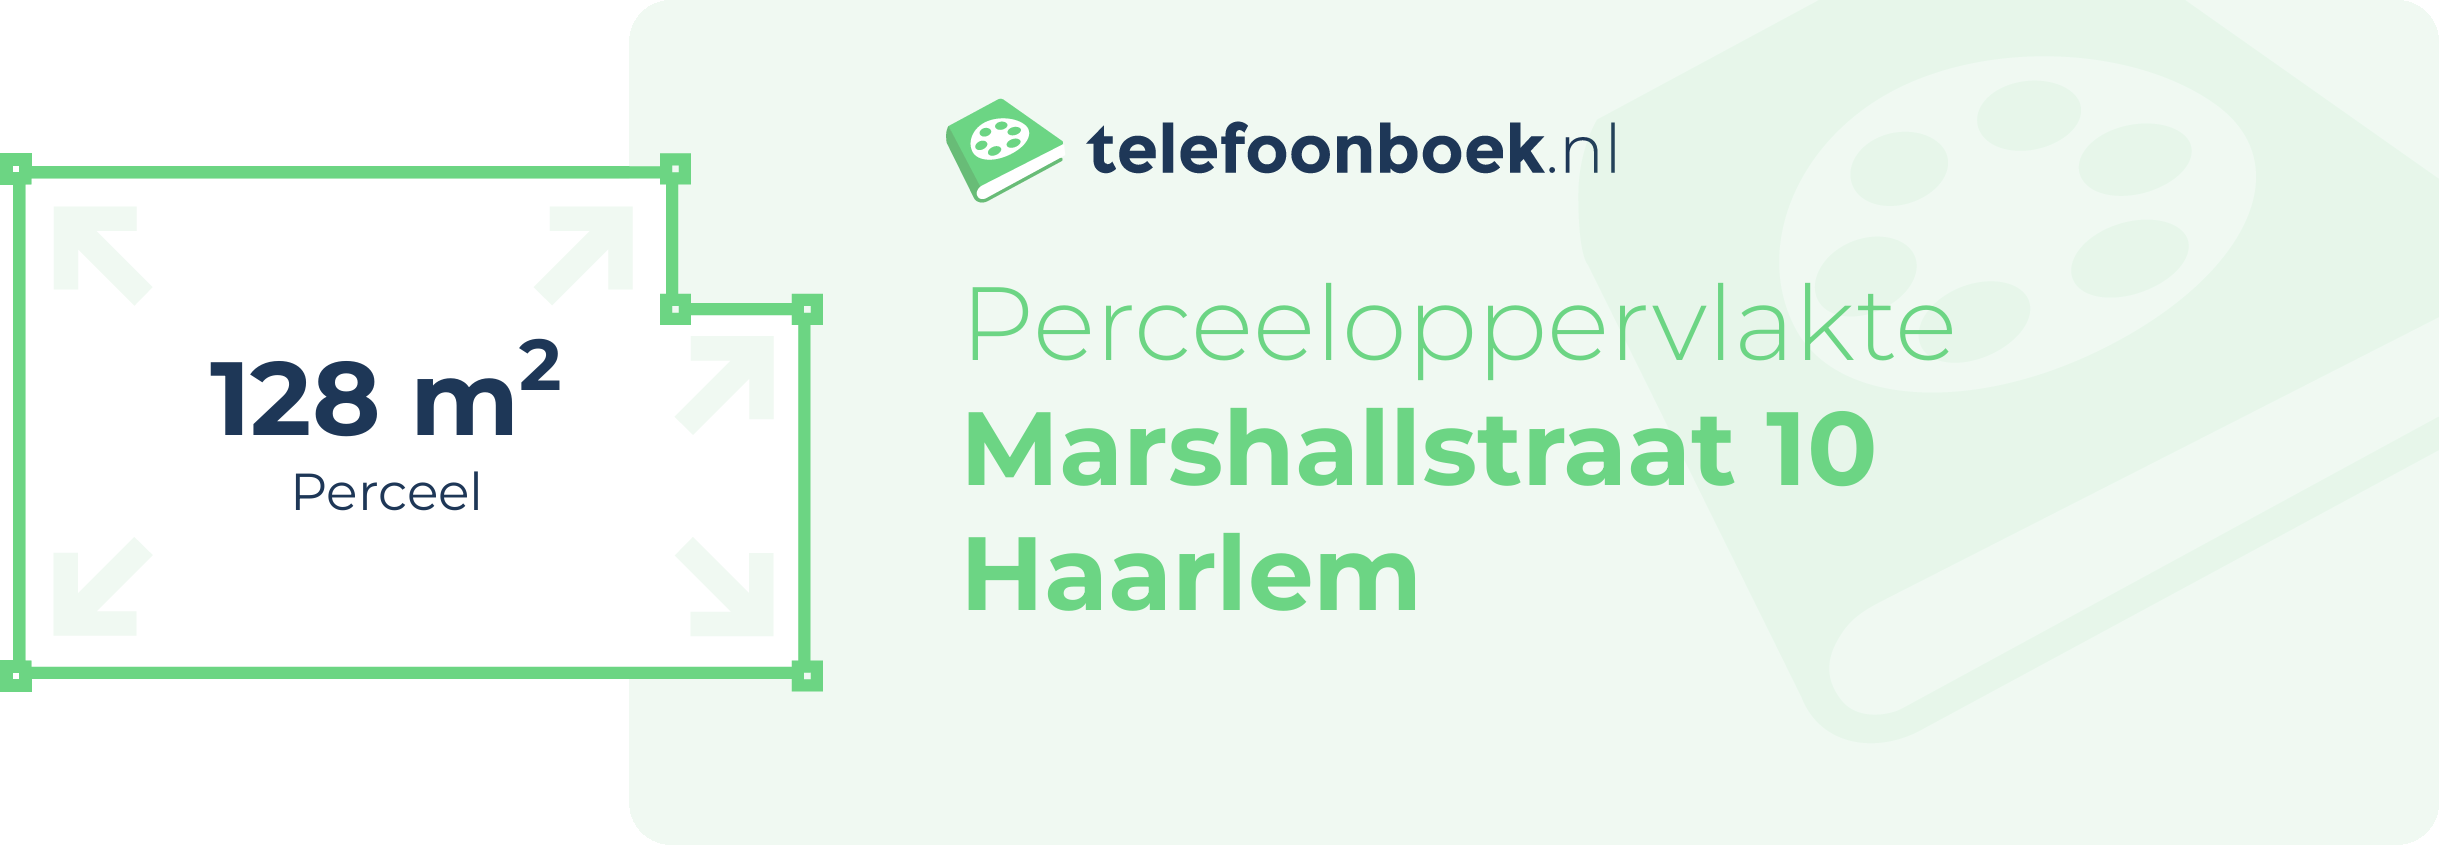 Perceeloppervlakte Marshallstraat 10 Haarlem